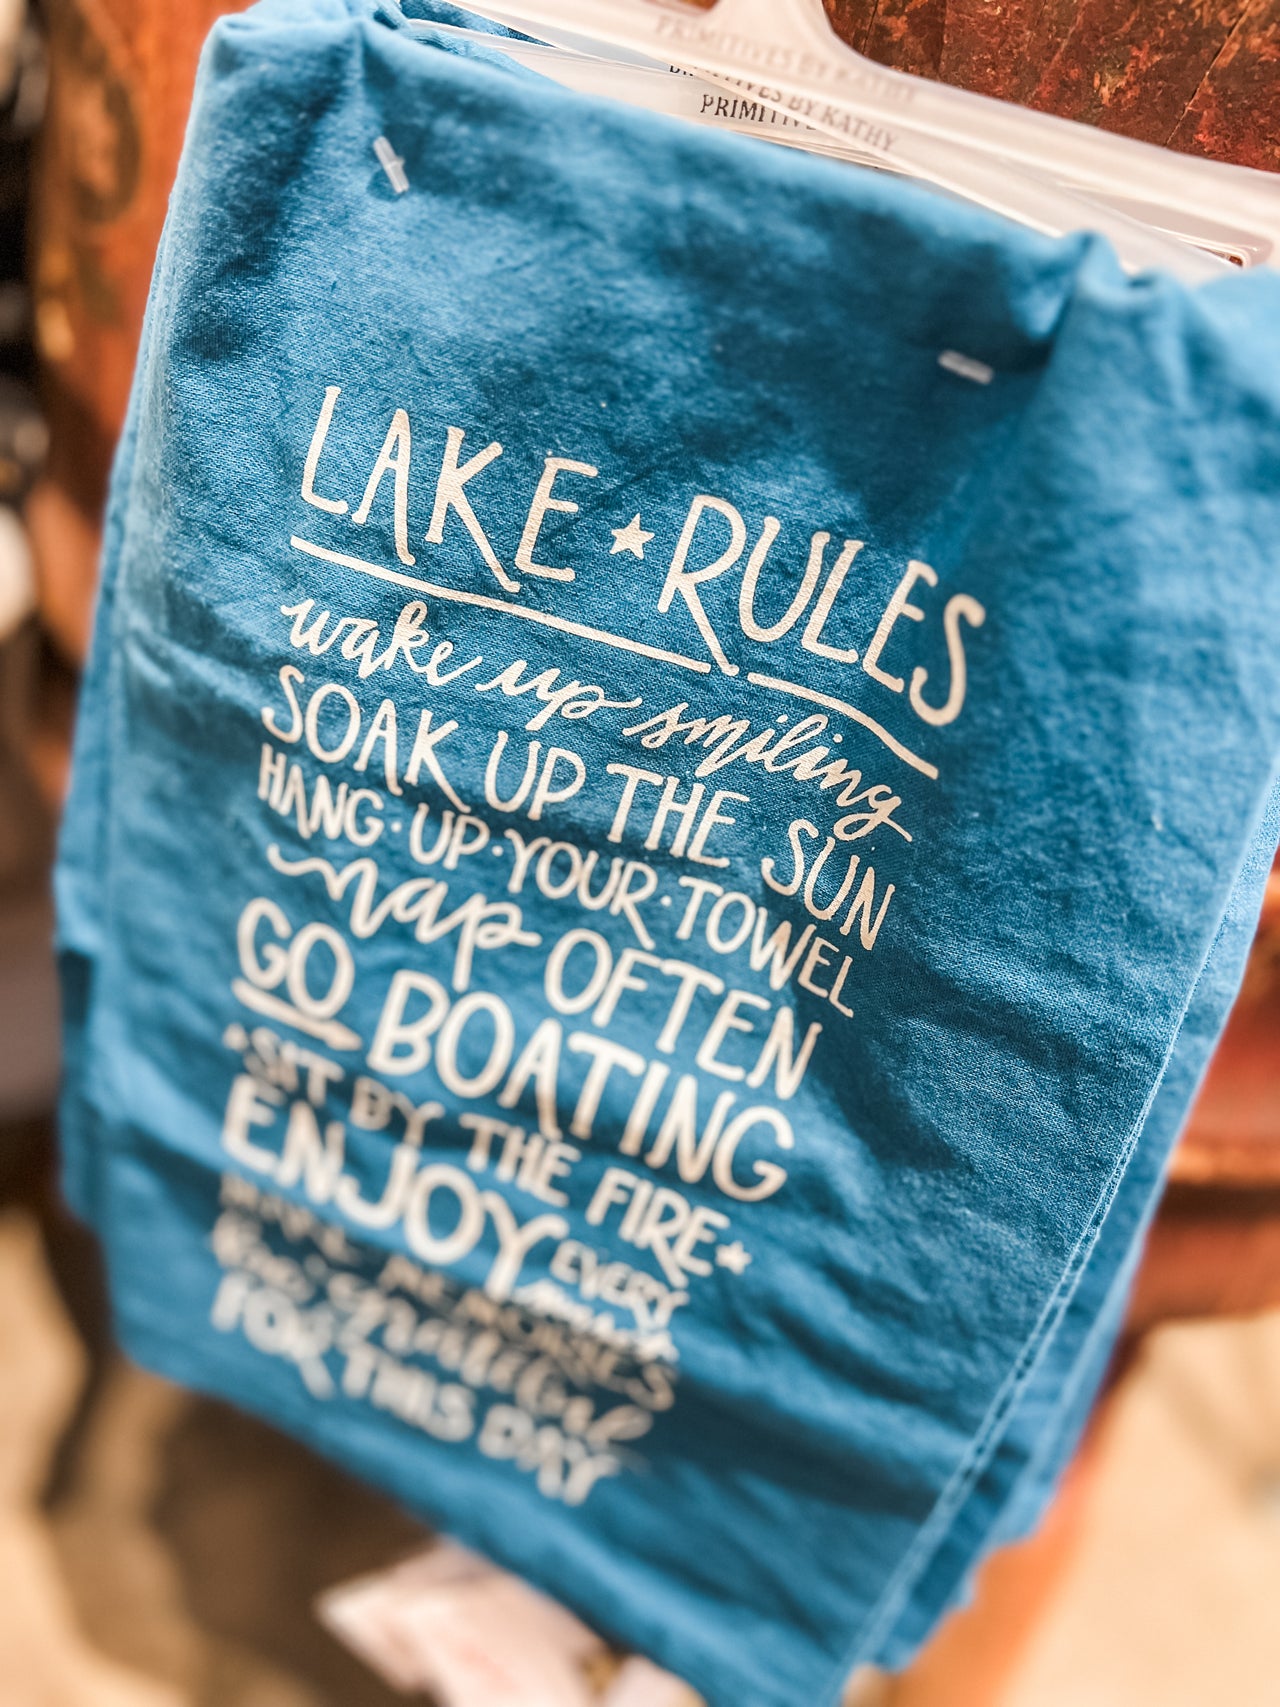 Lake Rules Kitchen Towel